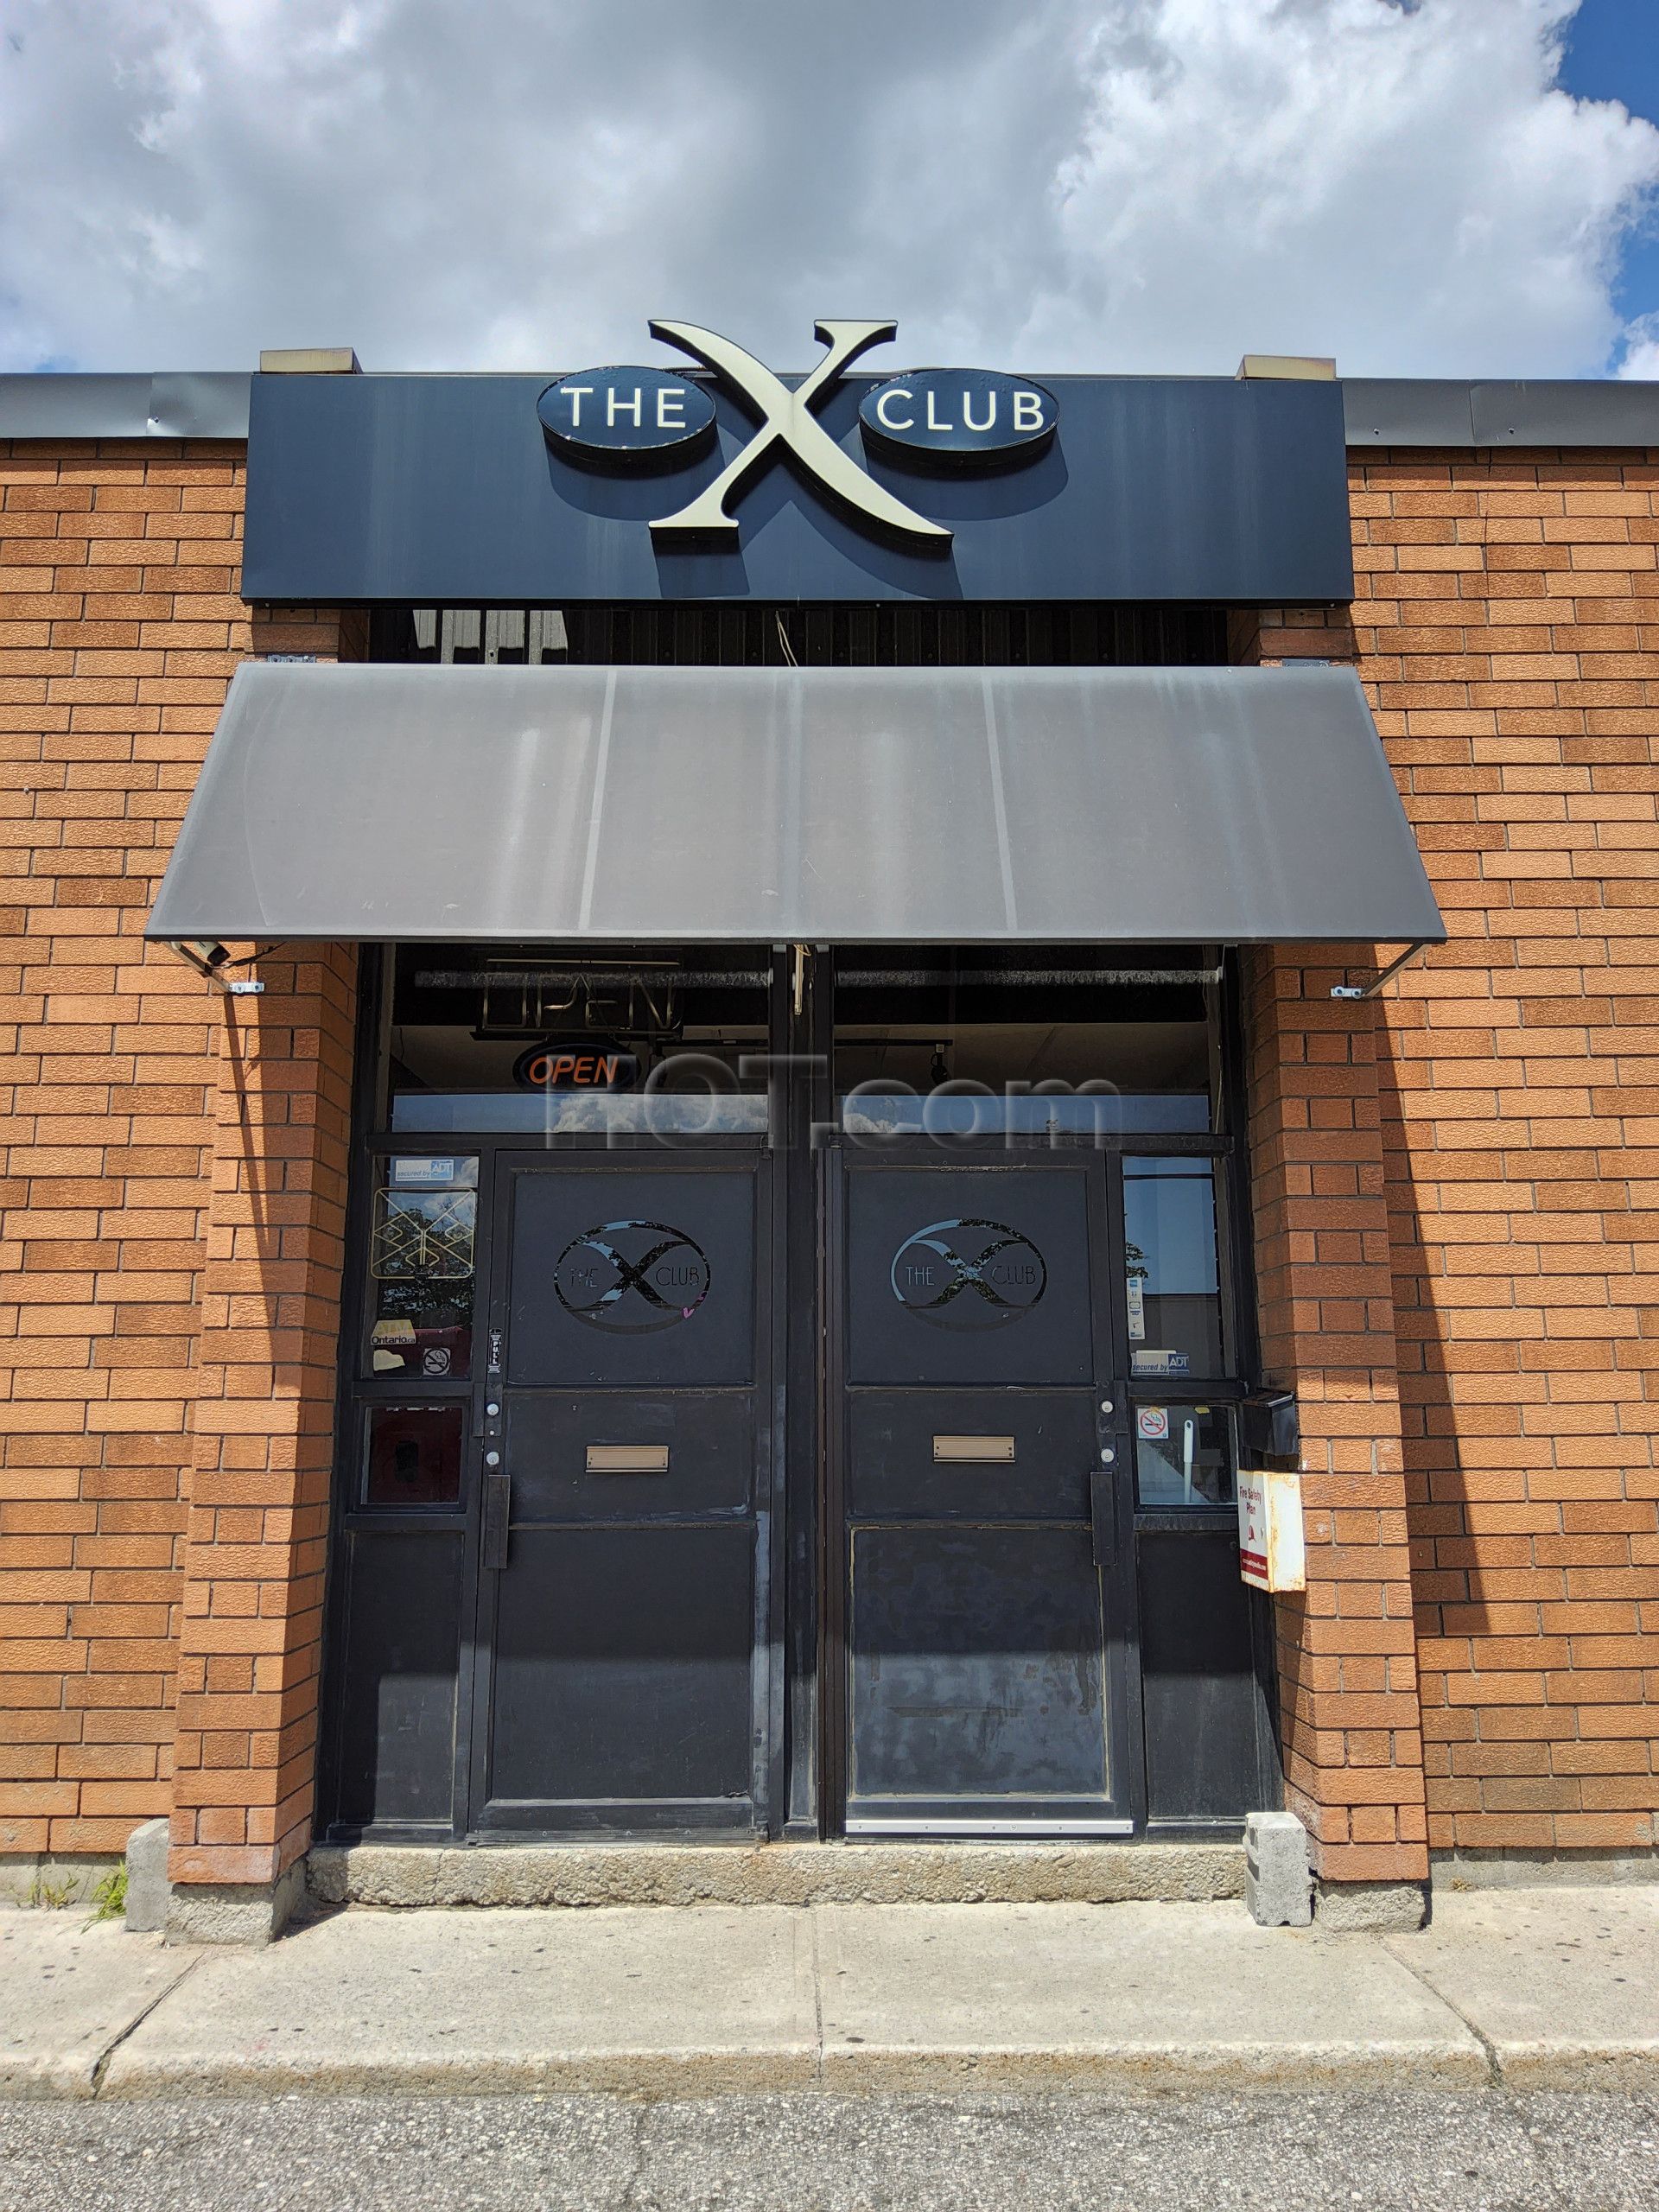 Mississauga, Ontario The X Club